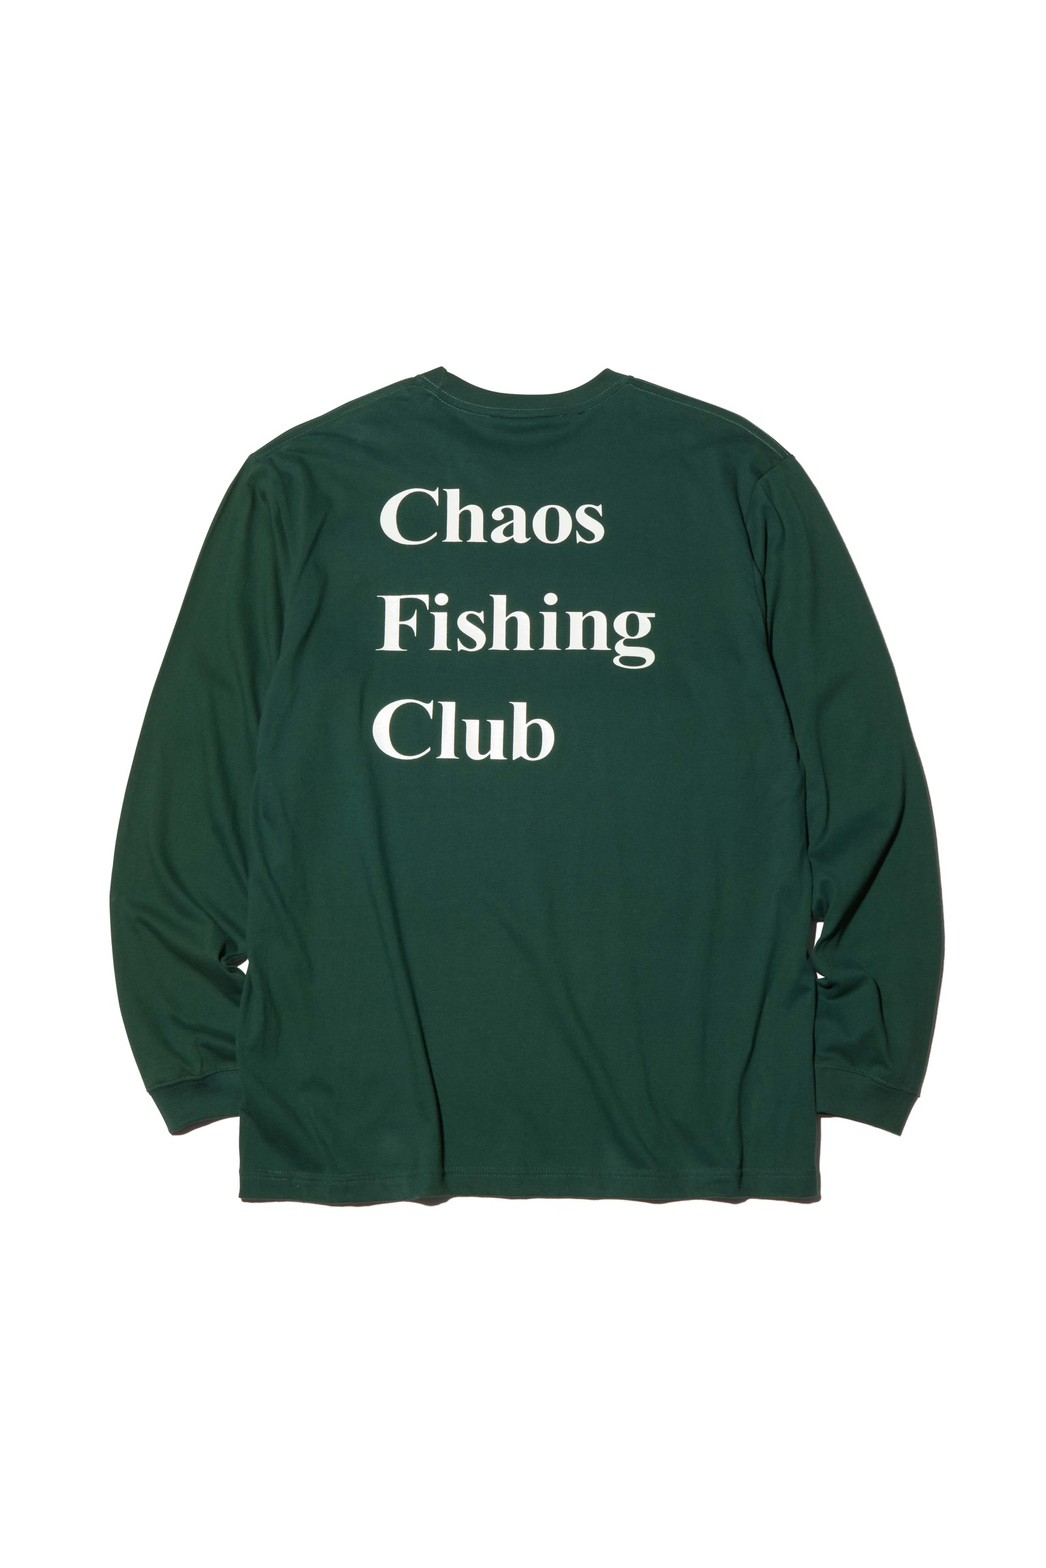 Chaos Fishing Club/カオスフィッシングクラブ/LOGO L/S TEE(M GREEN